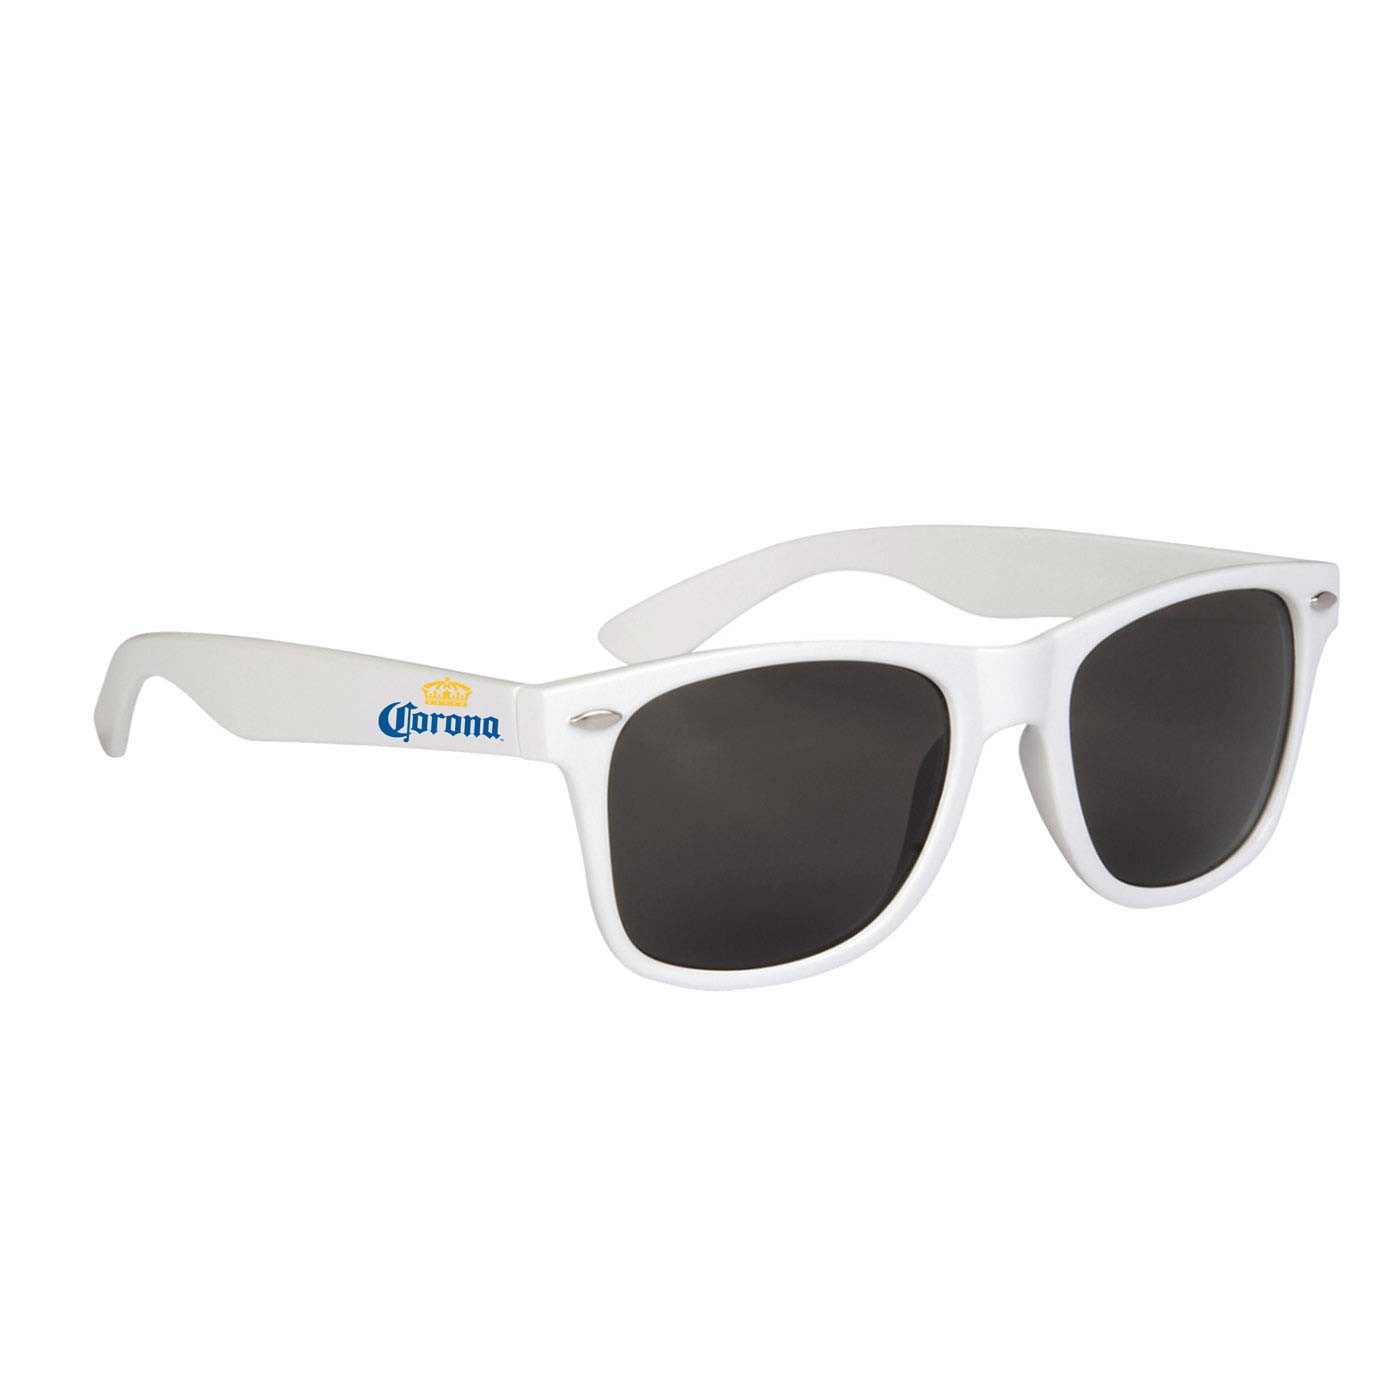 Corona Extra White Sunglasses